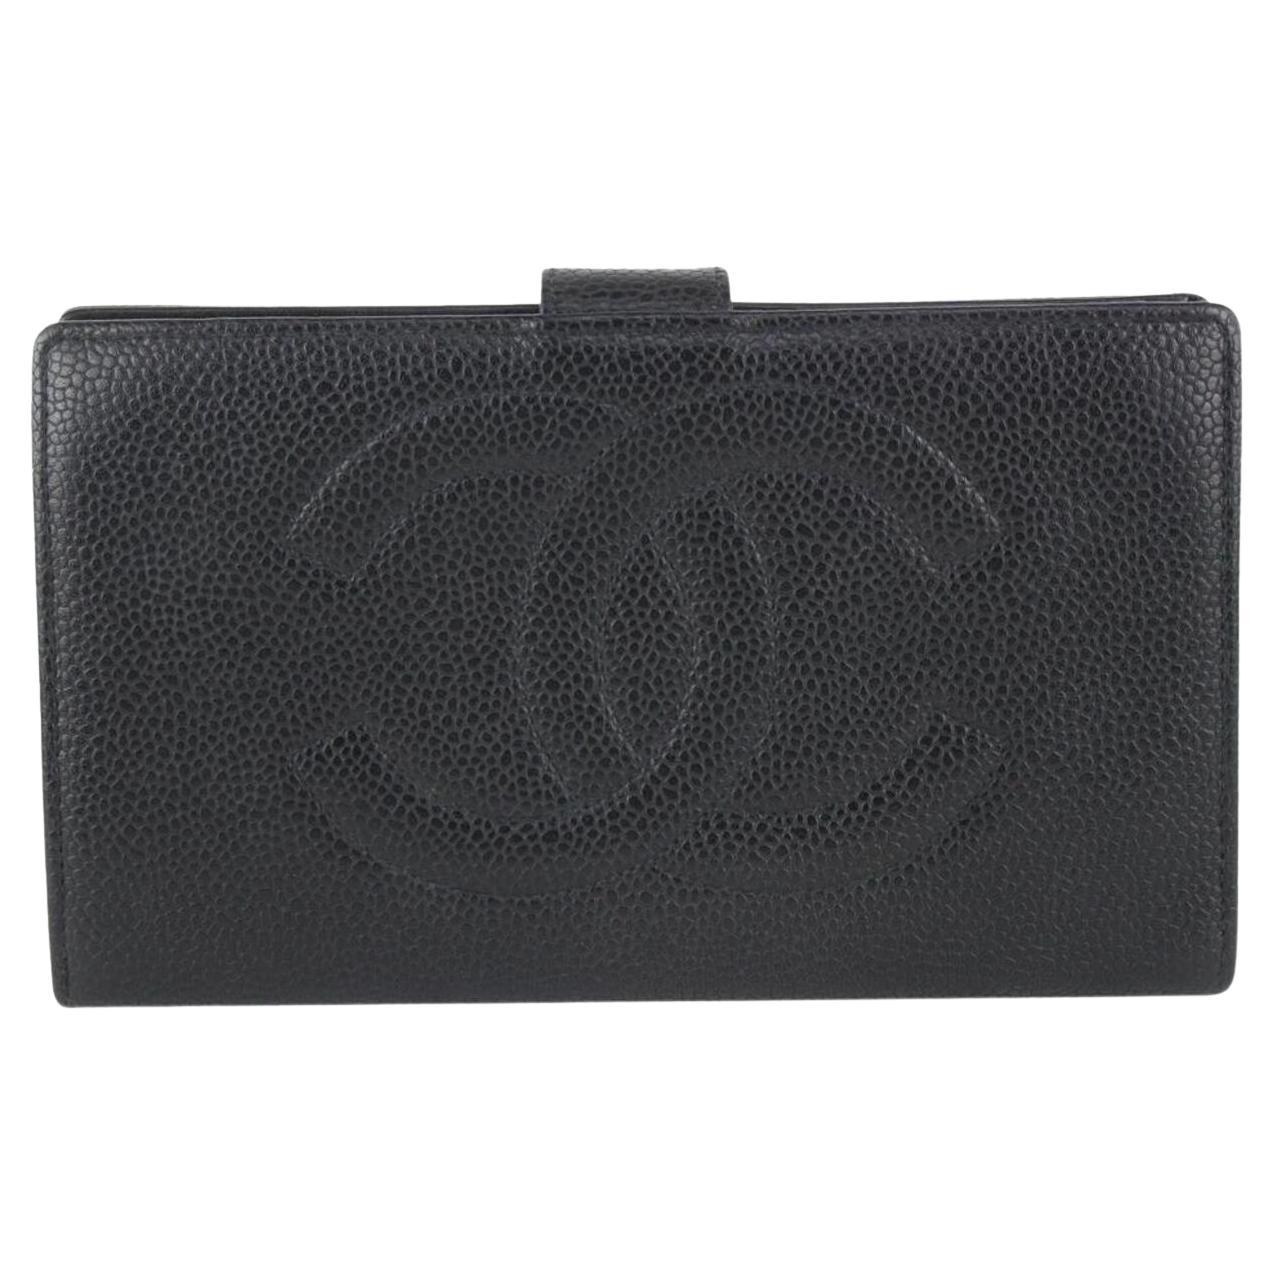 Chanel Black Caviar Leather CC Logo Long Flap Wallet 104c55 For Sale